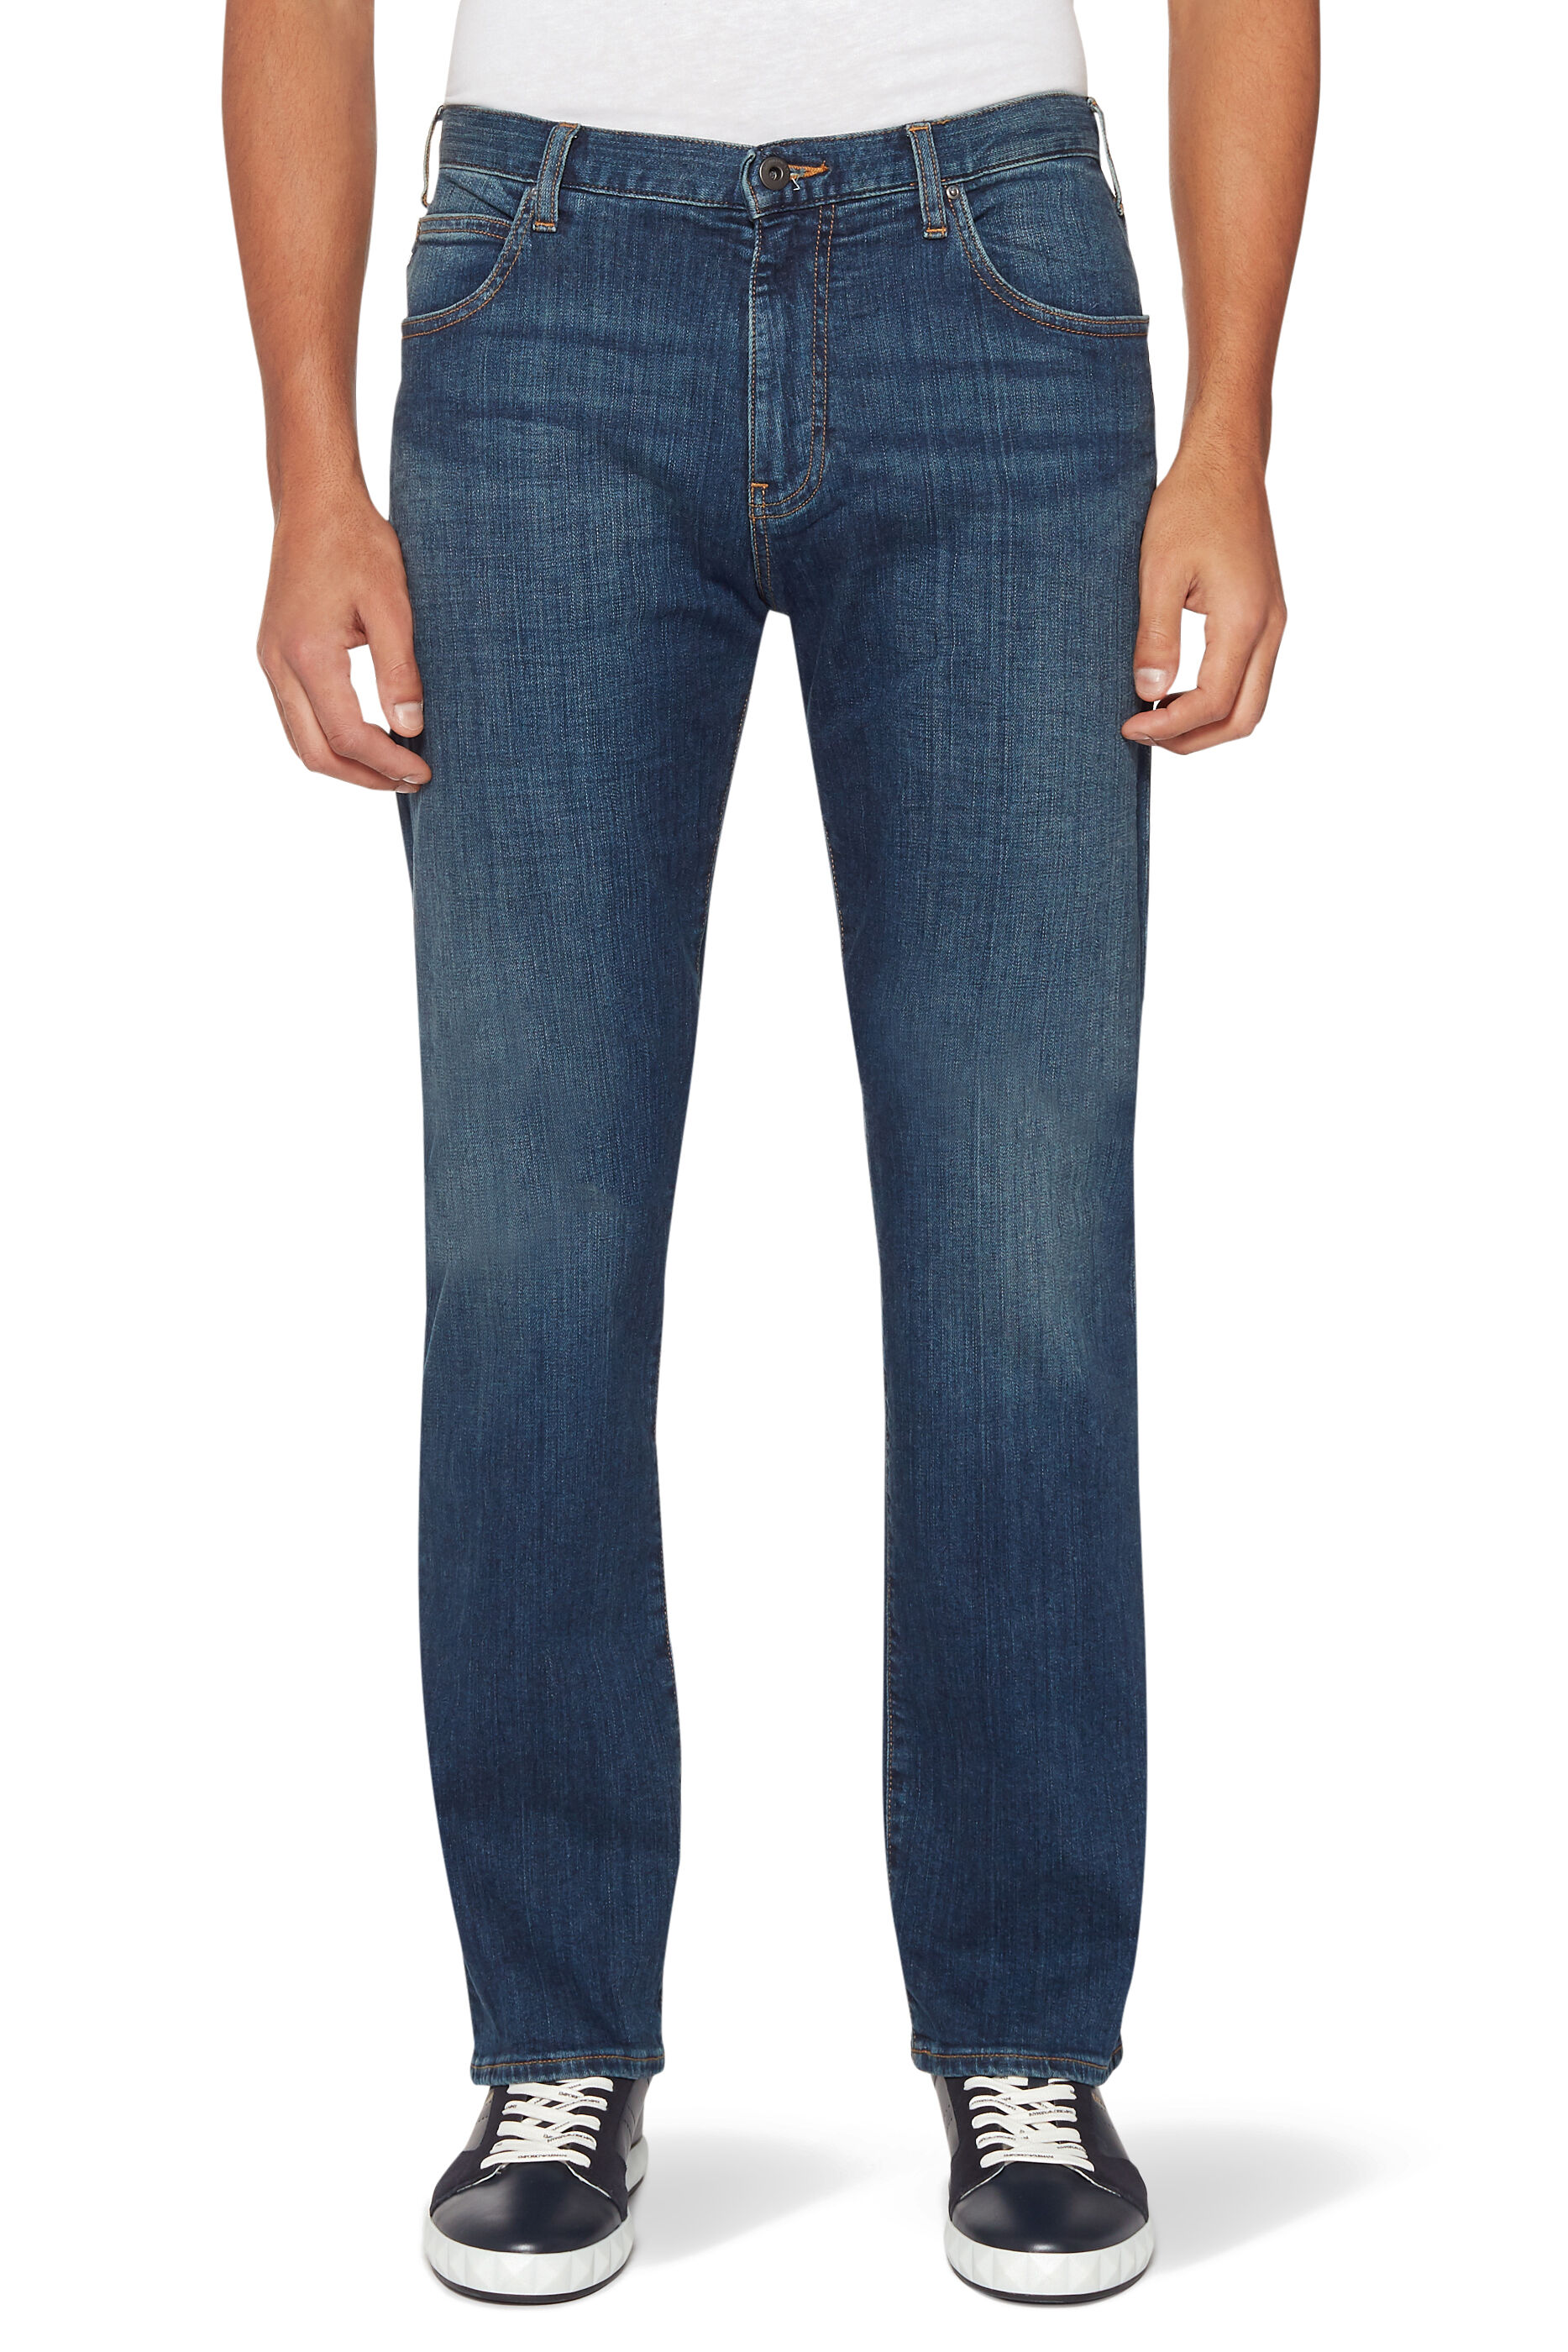 Men's Jeans ARMANI Mens Emporio Armani Straight Leg Denim Jeans Dark Blue  Faded size waist 34 